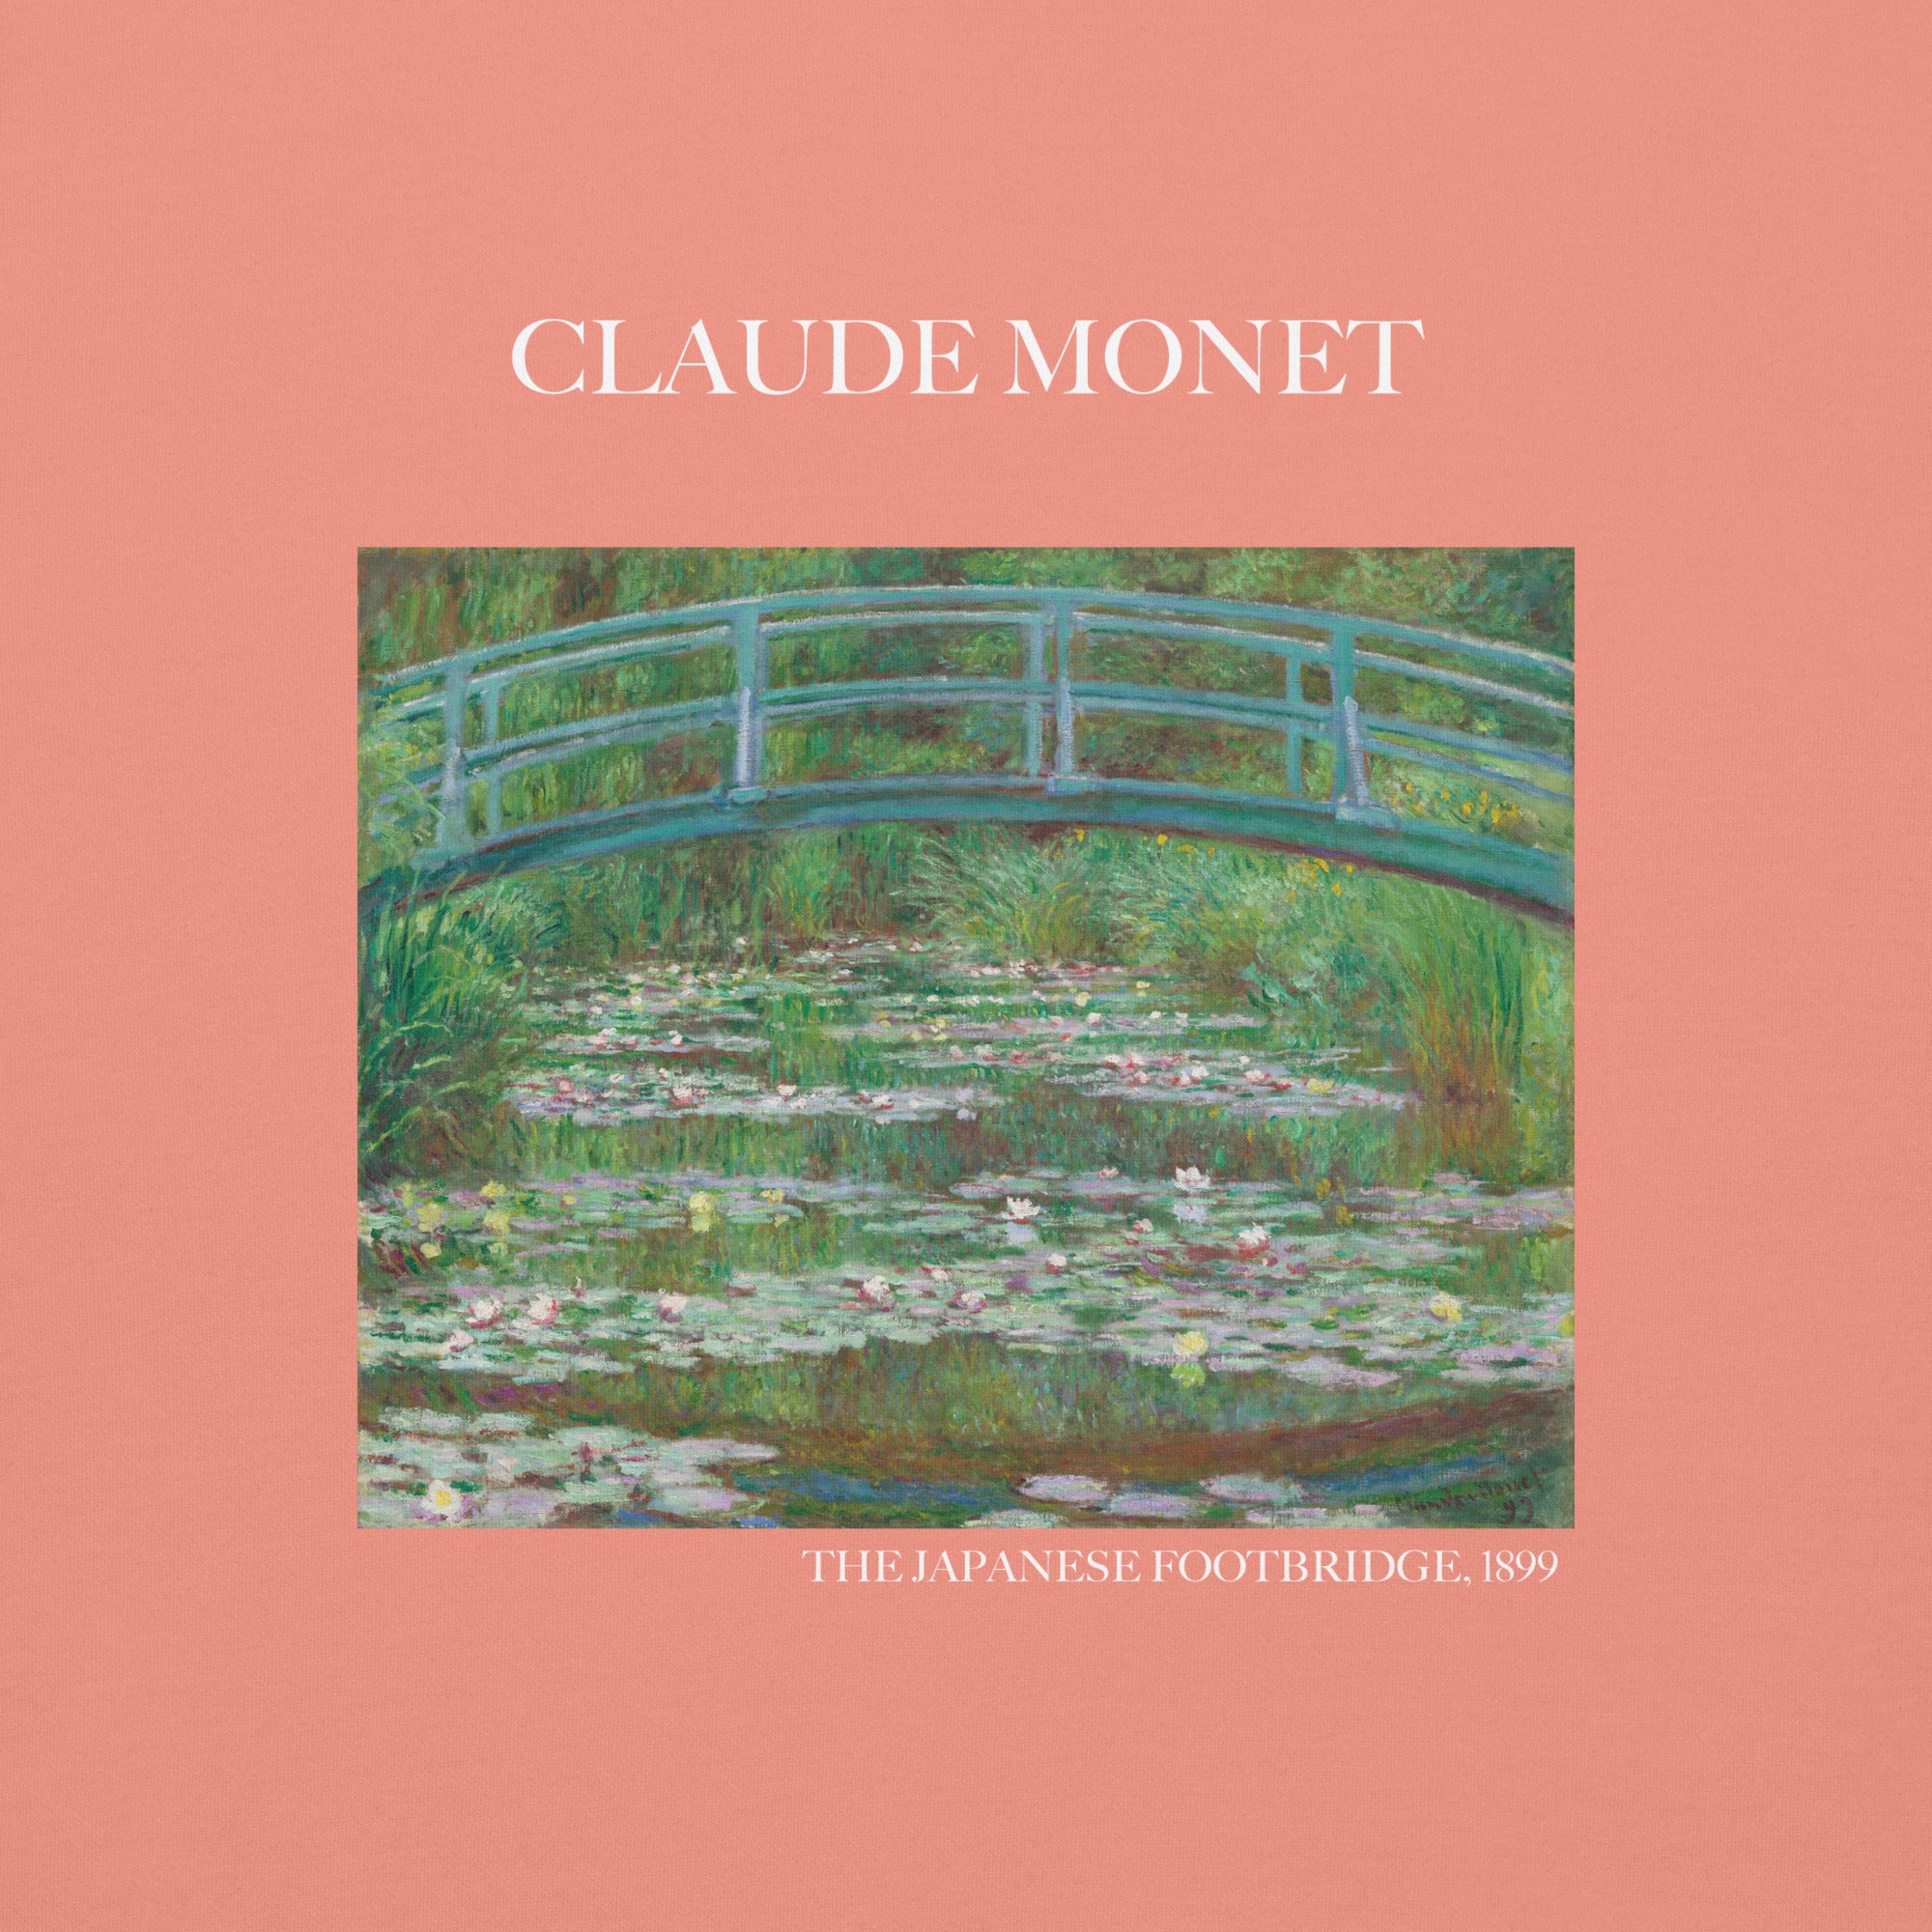 Claude Monet 'The Japanese Footbridge' Famous Painting Sweatshirt | Unisex Premium Sweatshirt